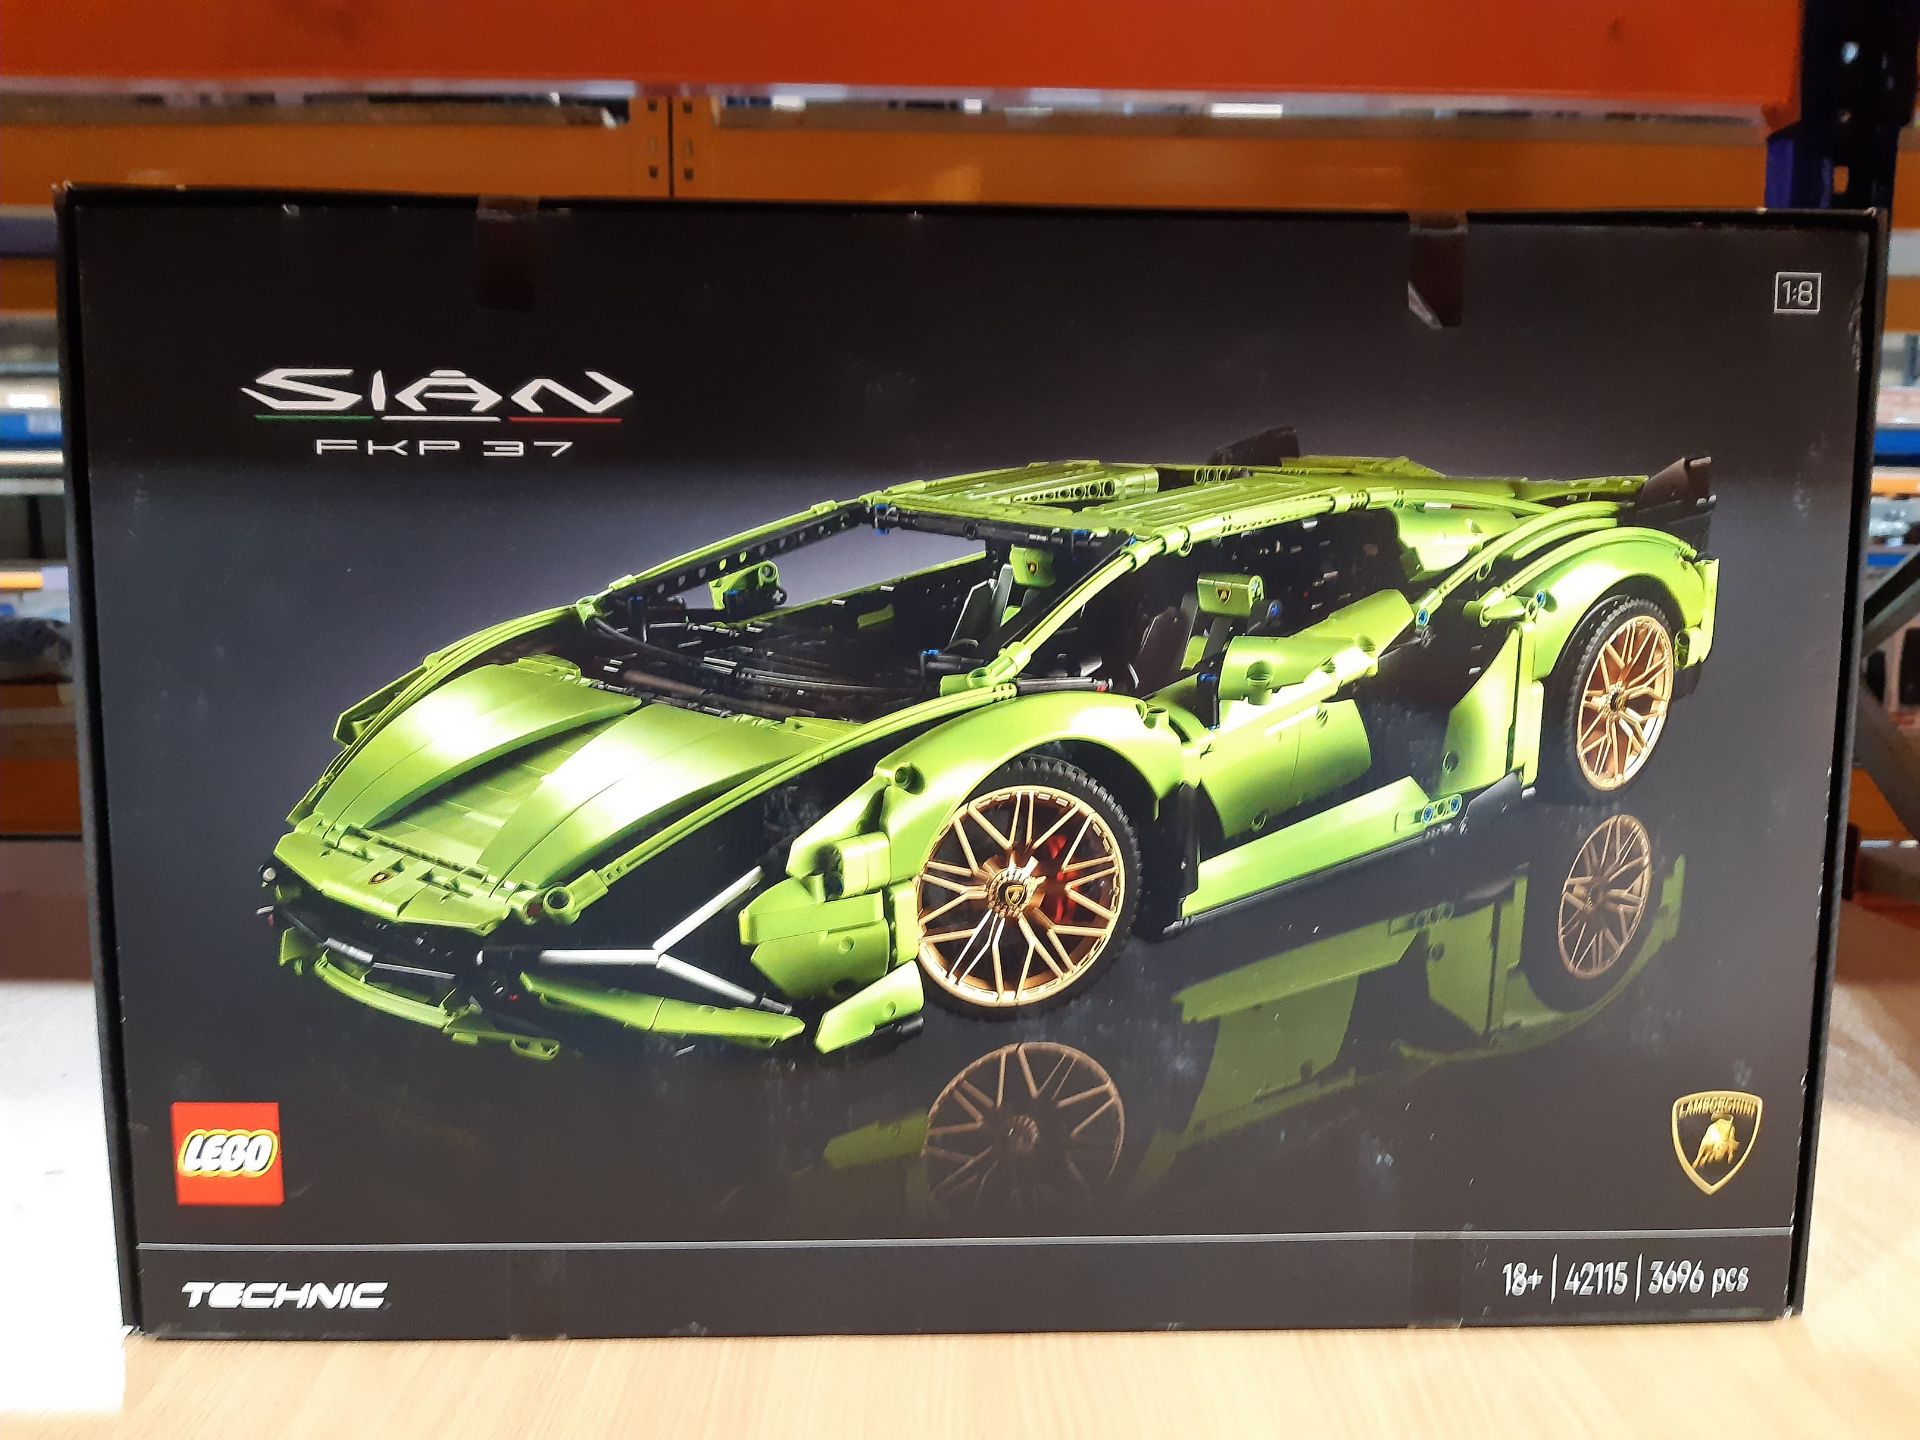 RRP £284.99 LEGO 42115 Technic Lamborghini Si n FKP 37 Race Car - Image 2 of 3